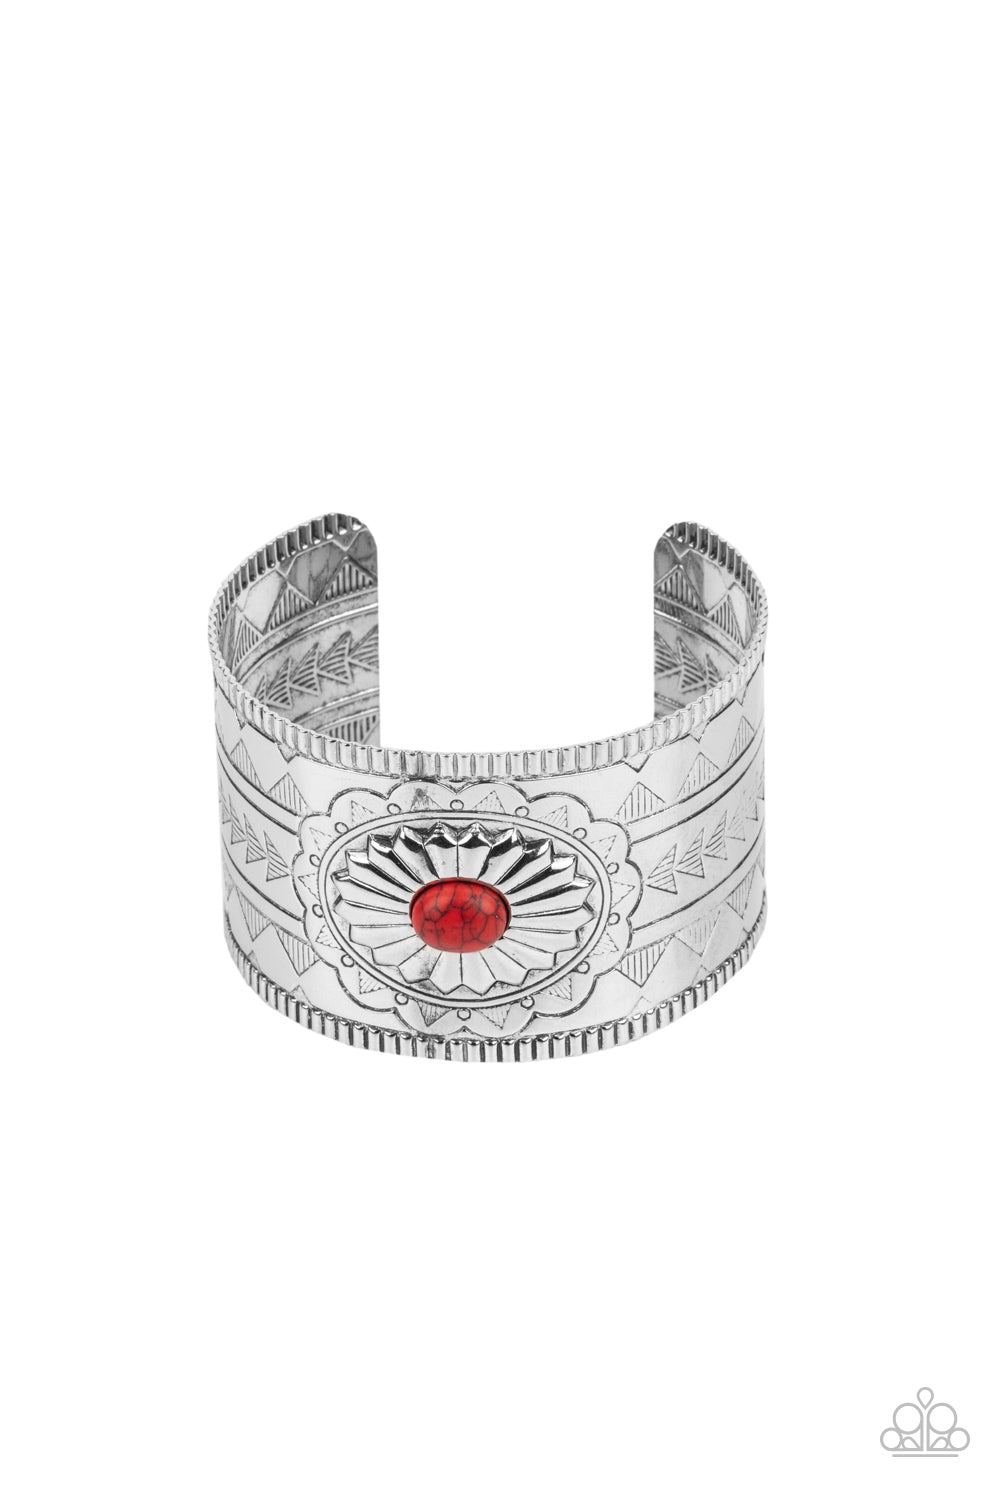 Aztec Artisan - Red Stone Cuff Bracelet - Princess Glam Shop